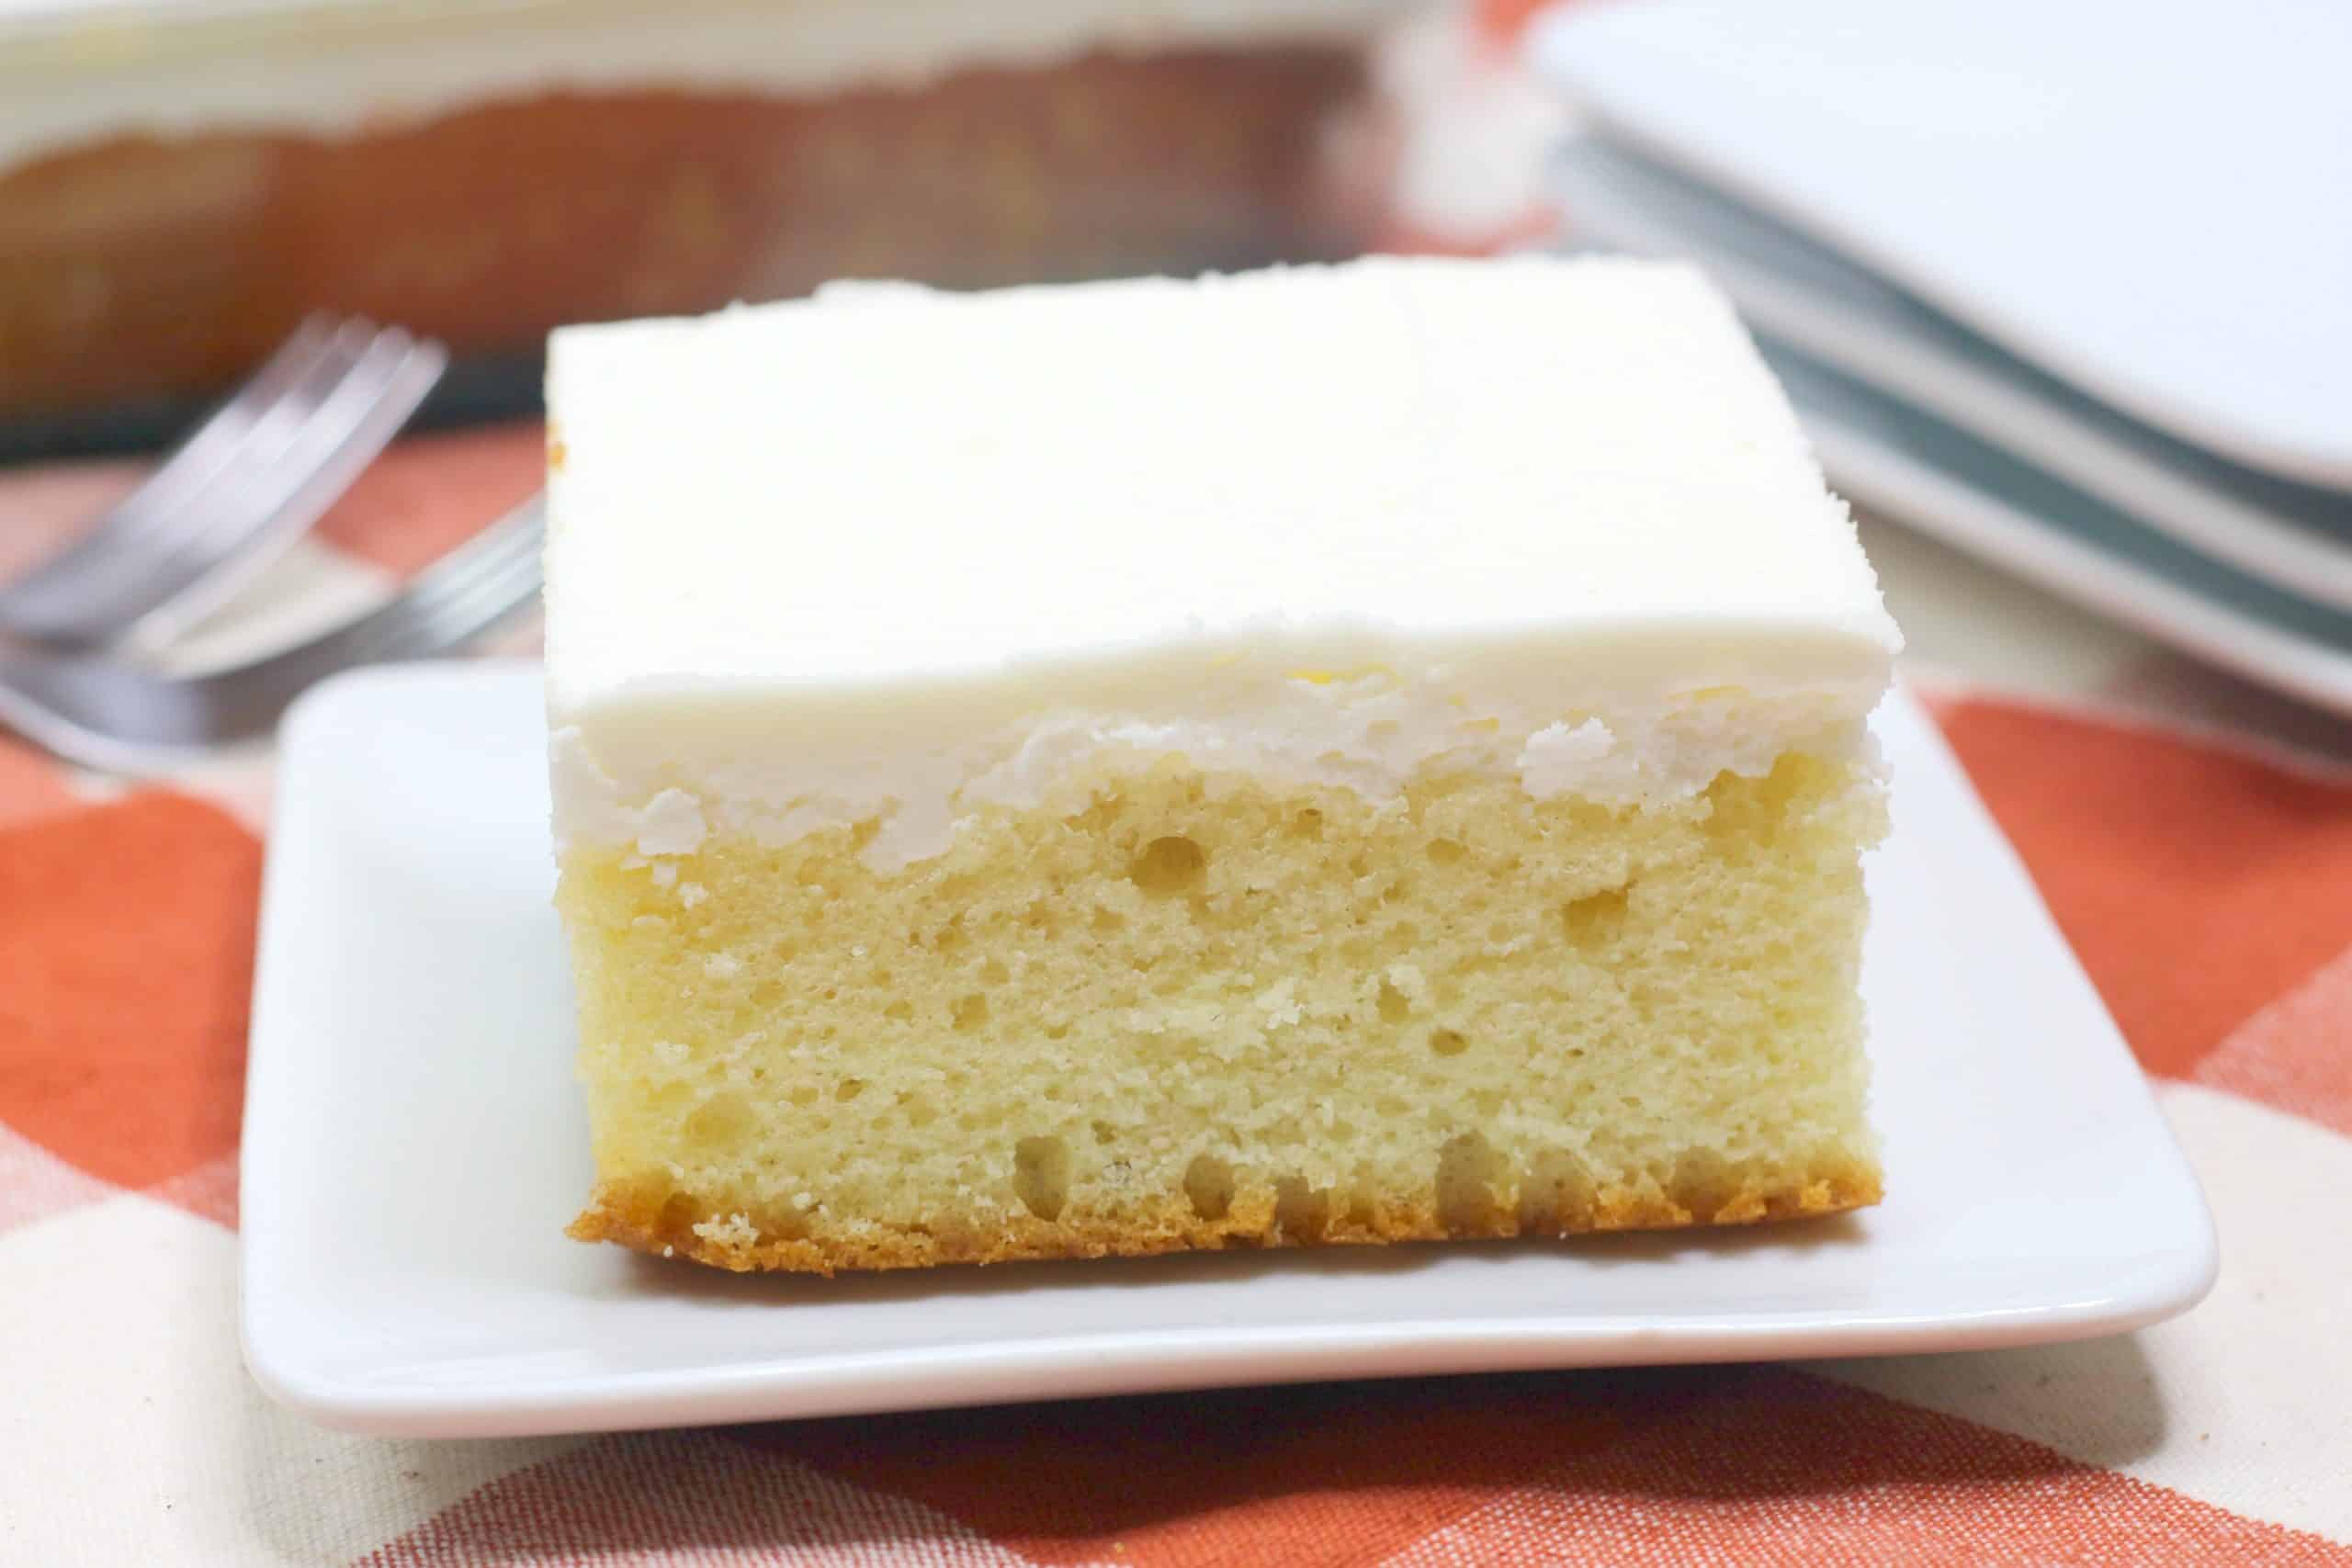 slice of vanilla cake on plate